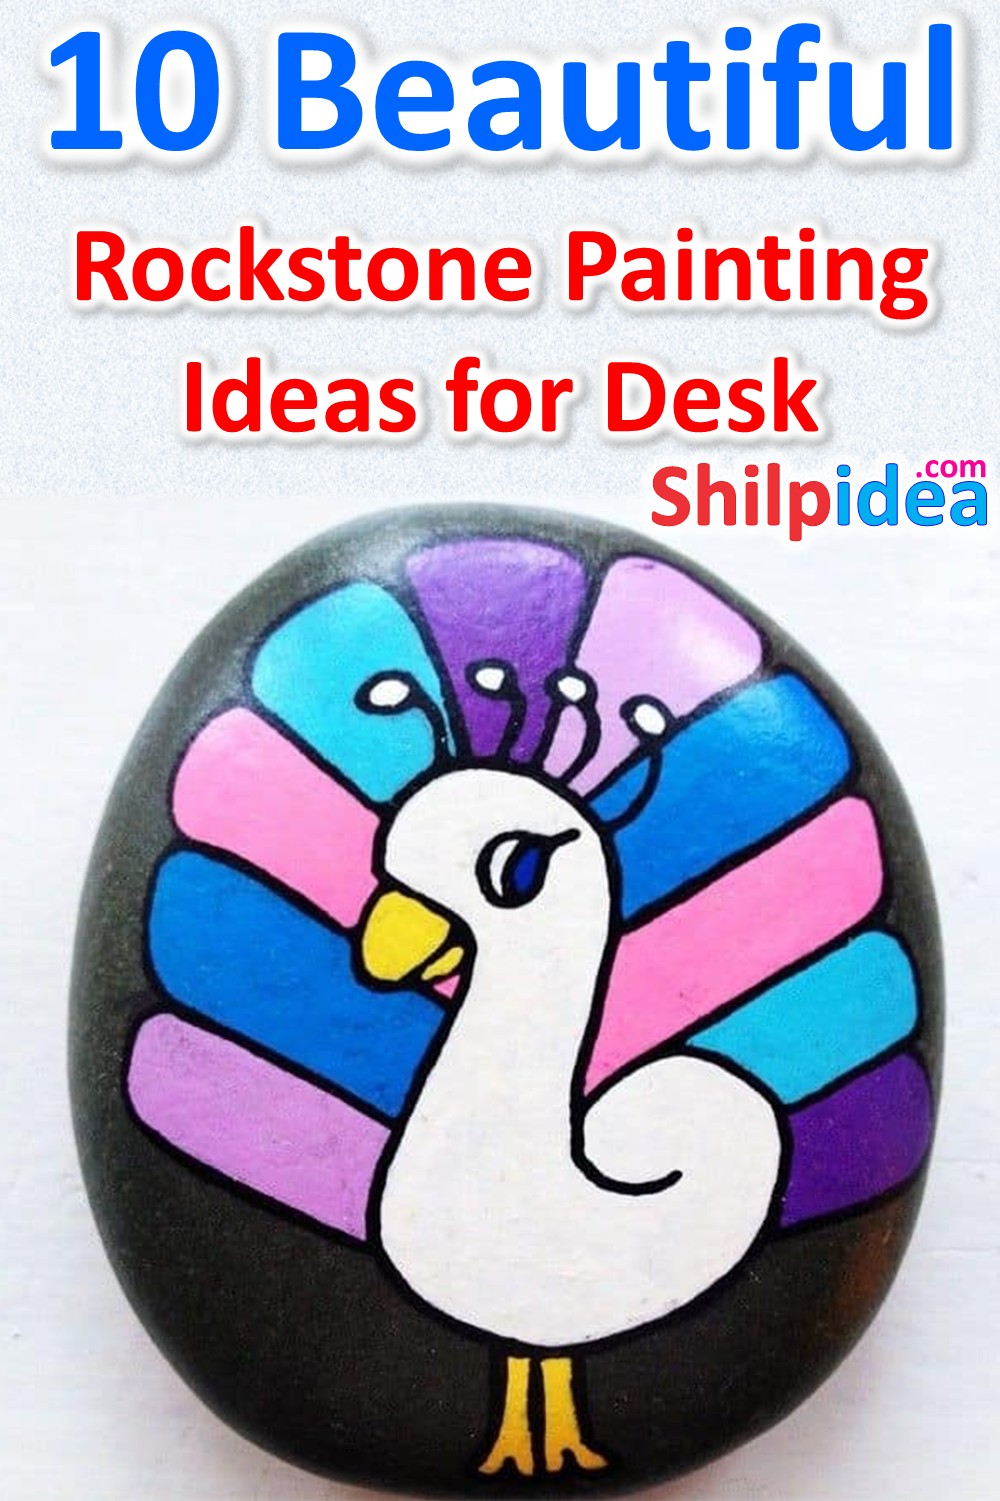 rock-stone-paintig-ideas-shilpidea-pin